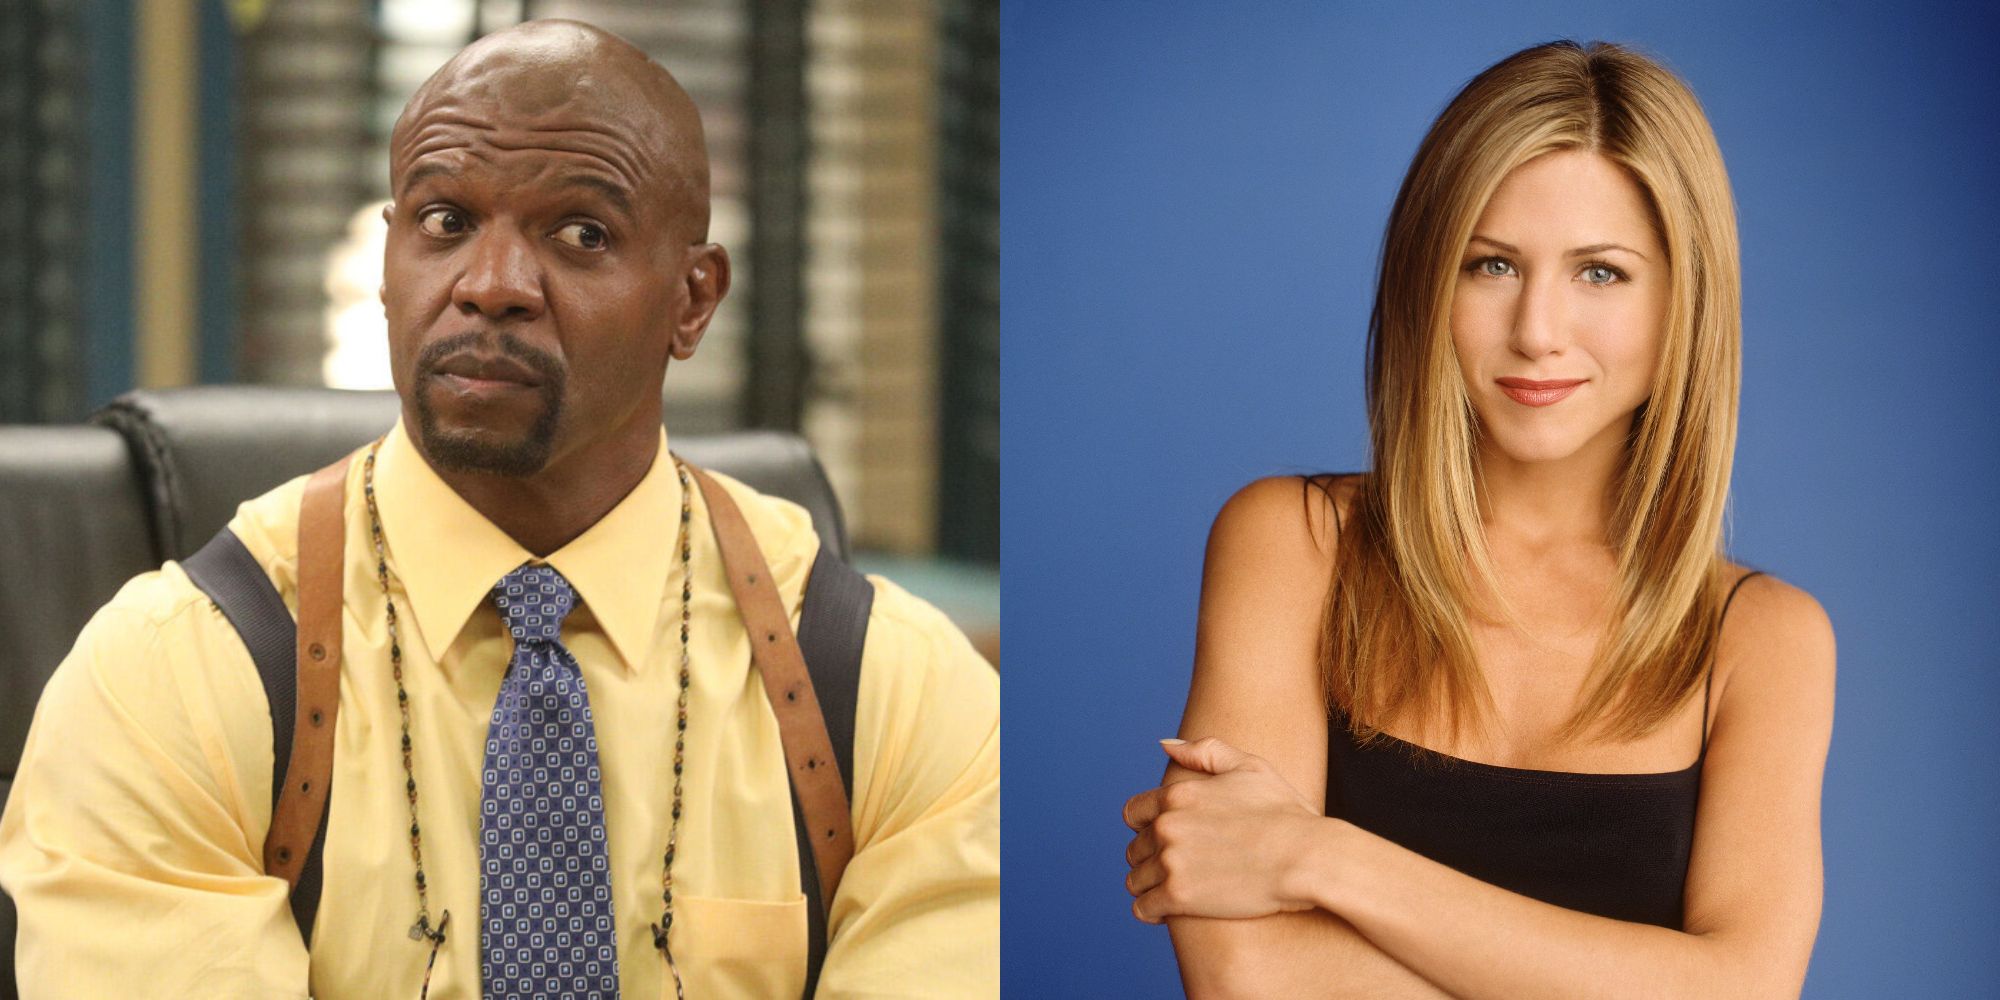 Terry Crews in Brooklyn Nine-Nine and Jennifer Aniston as Rachel in Friends